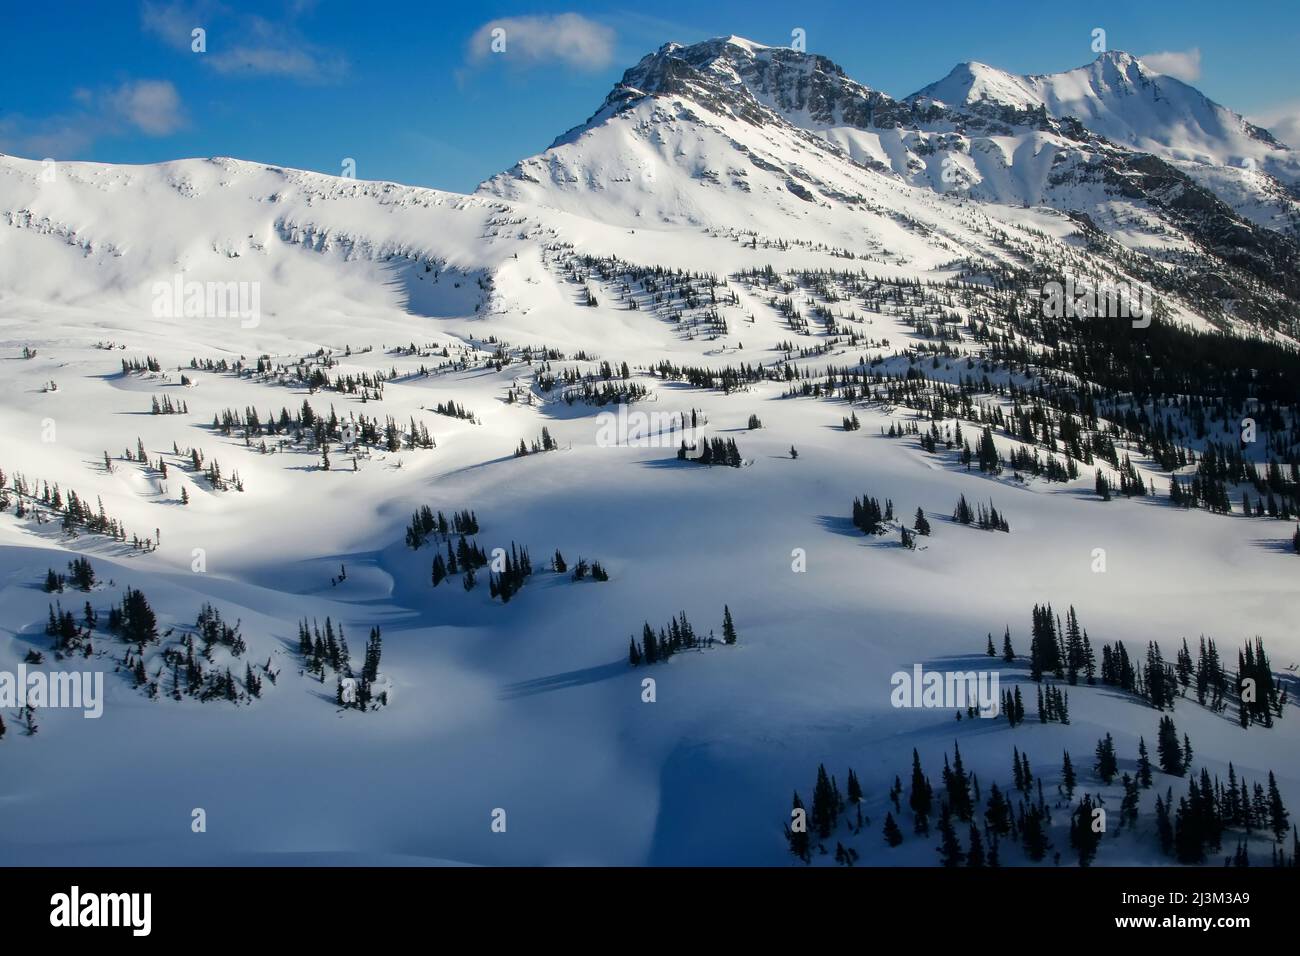 Ein Schneefeld, Bäume und Berge.; Selkirk Mountains, British Columbia, Kanada. Stockfoto